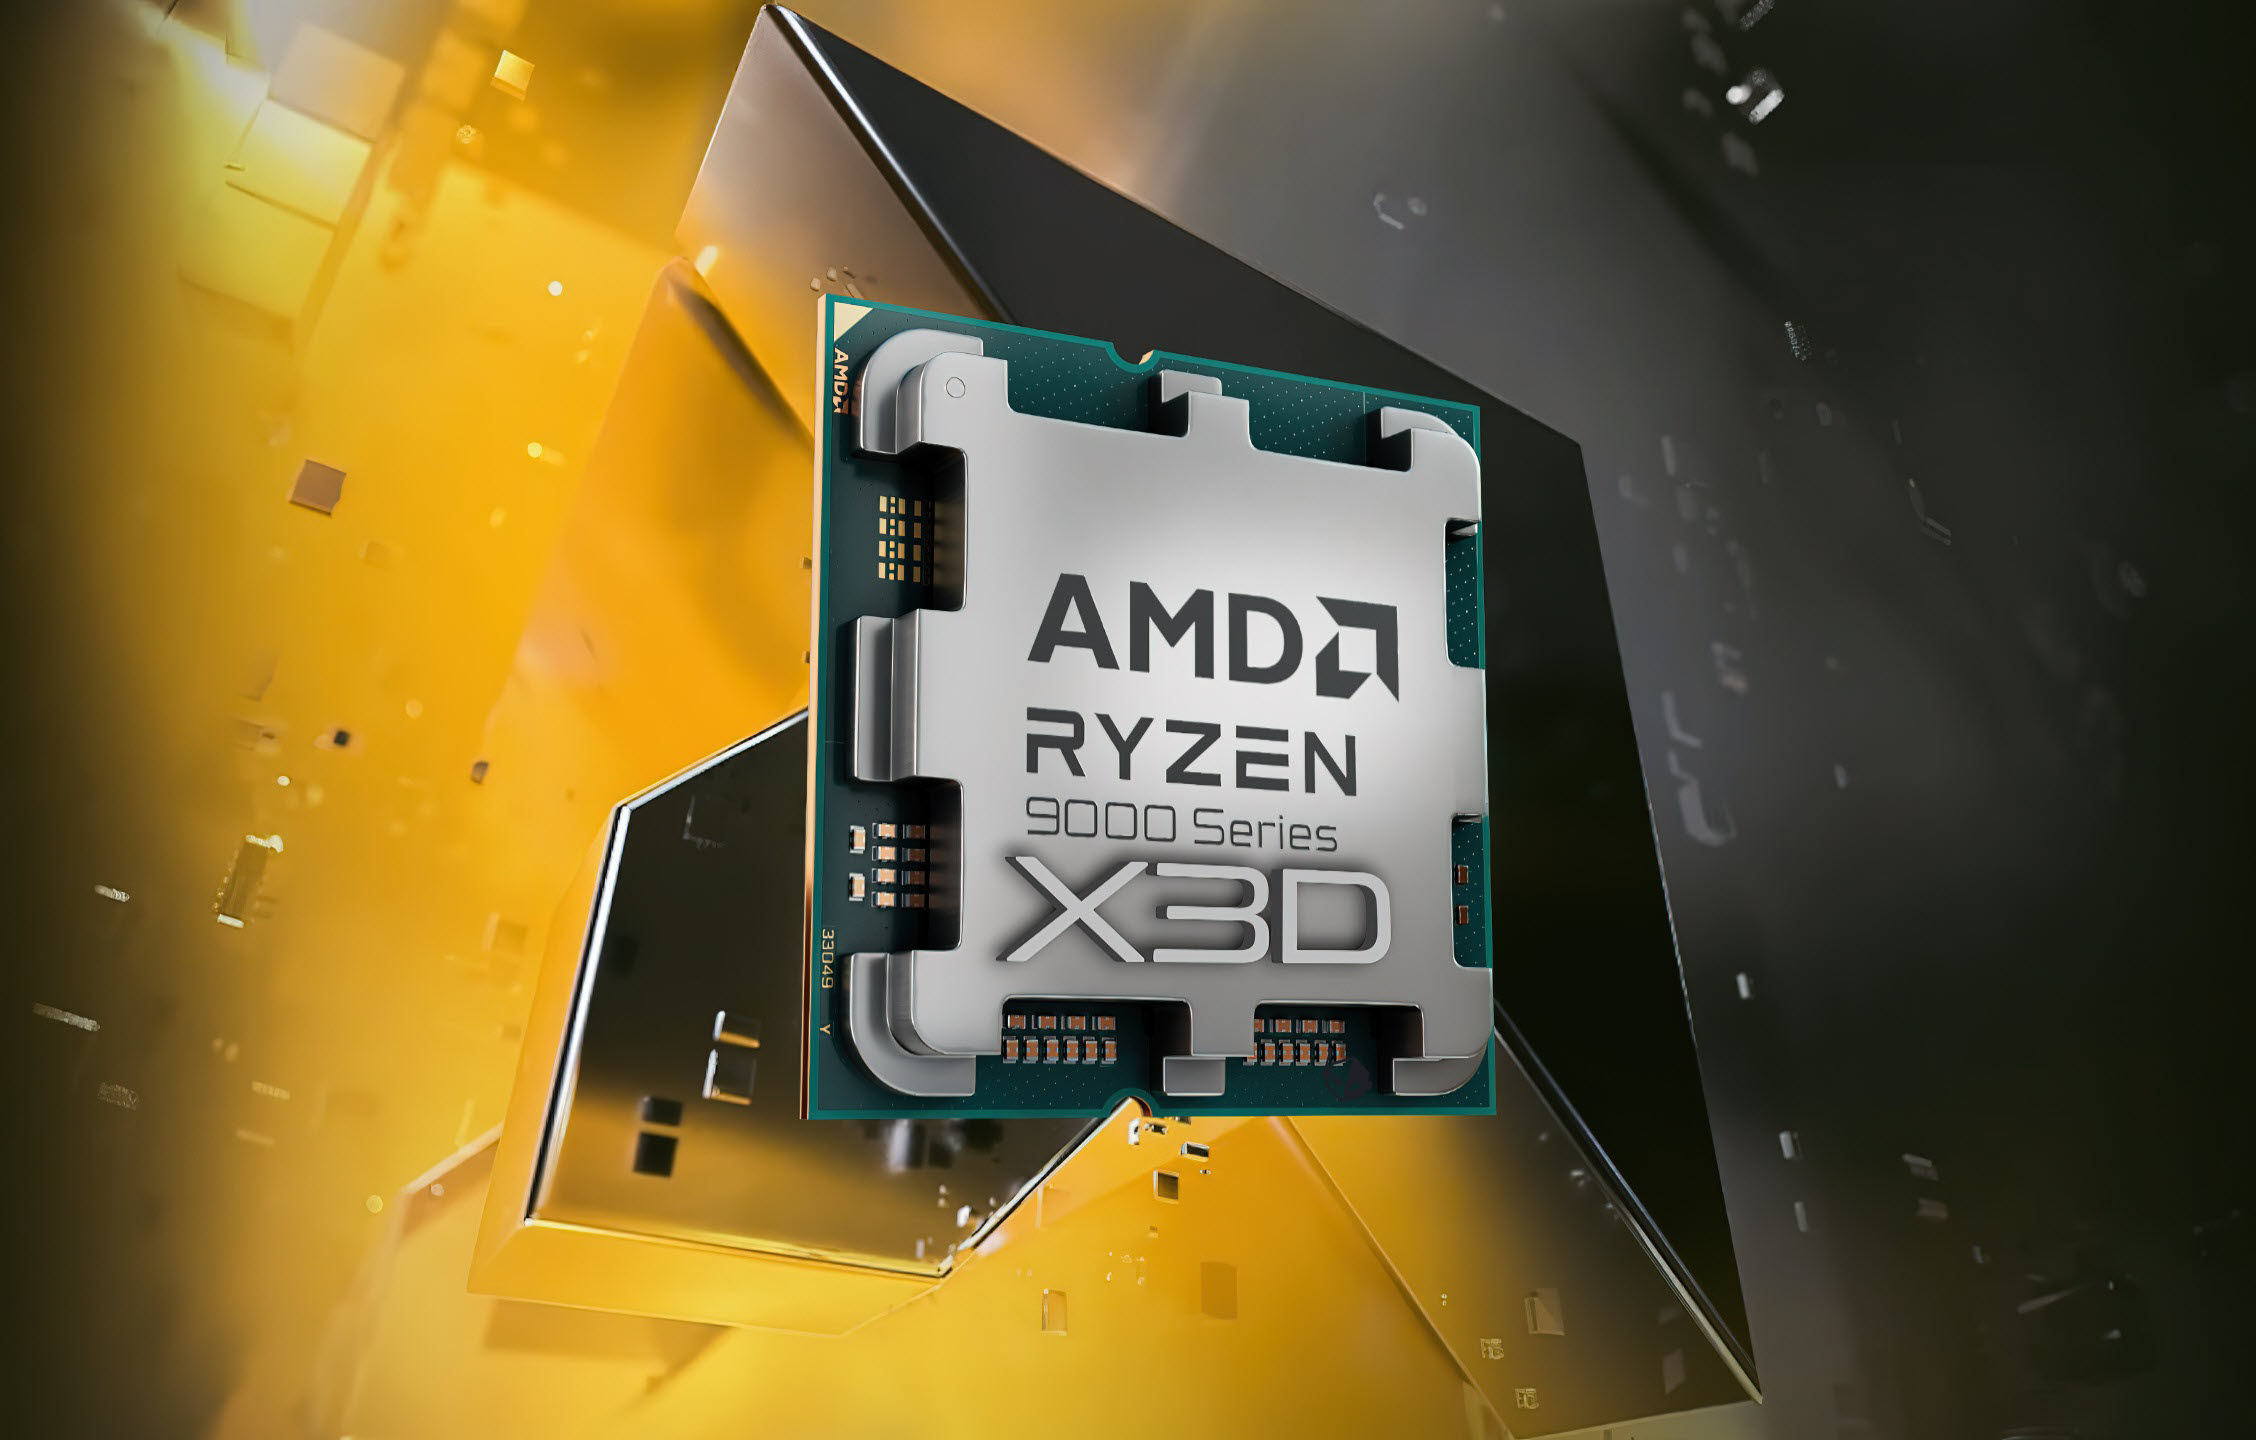 Amd Ryzen 9000X3D “3D V-Cache” Cpus With Zen 5 Cores To Offer Cool New Features, Even Better Than Ryzen 7000X3D